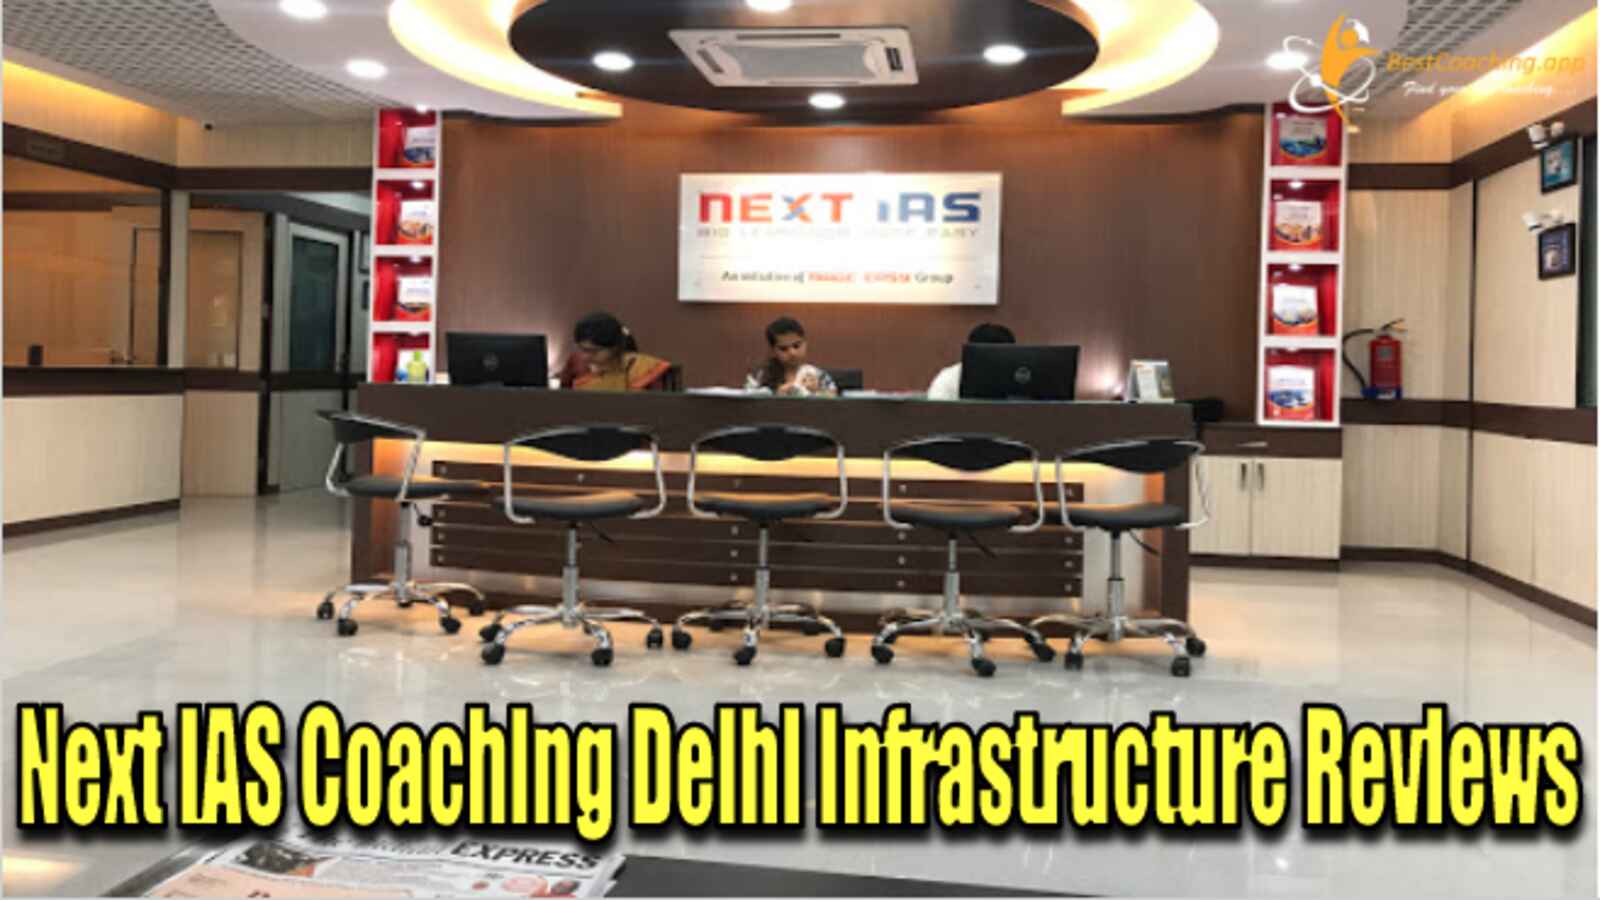 Next IAS Coaching Delhi Infrastructure Review